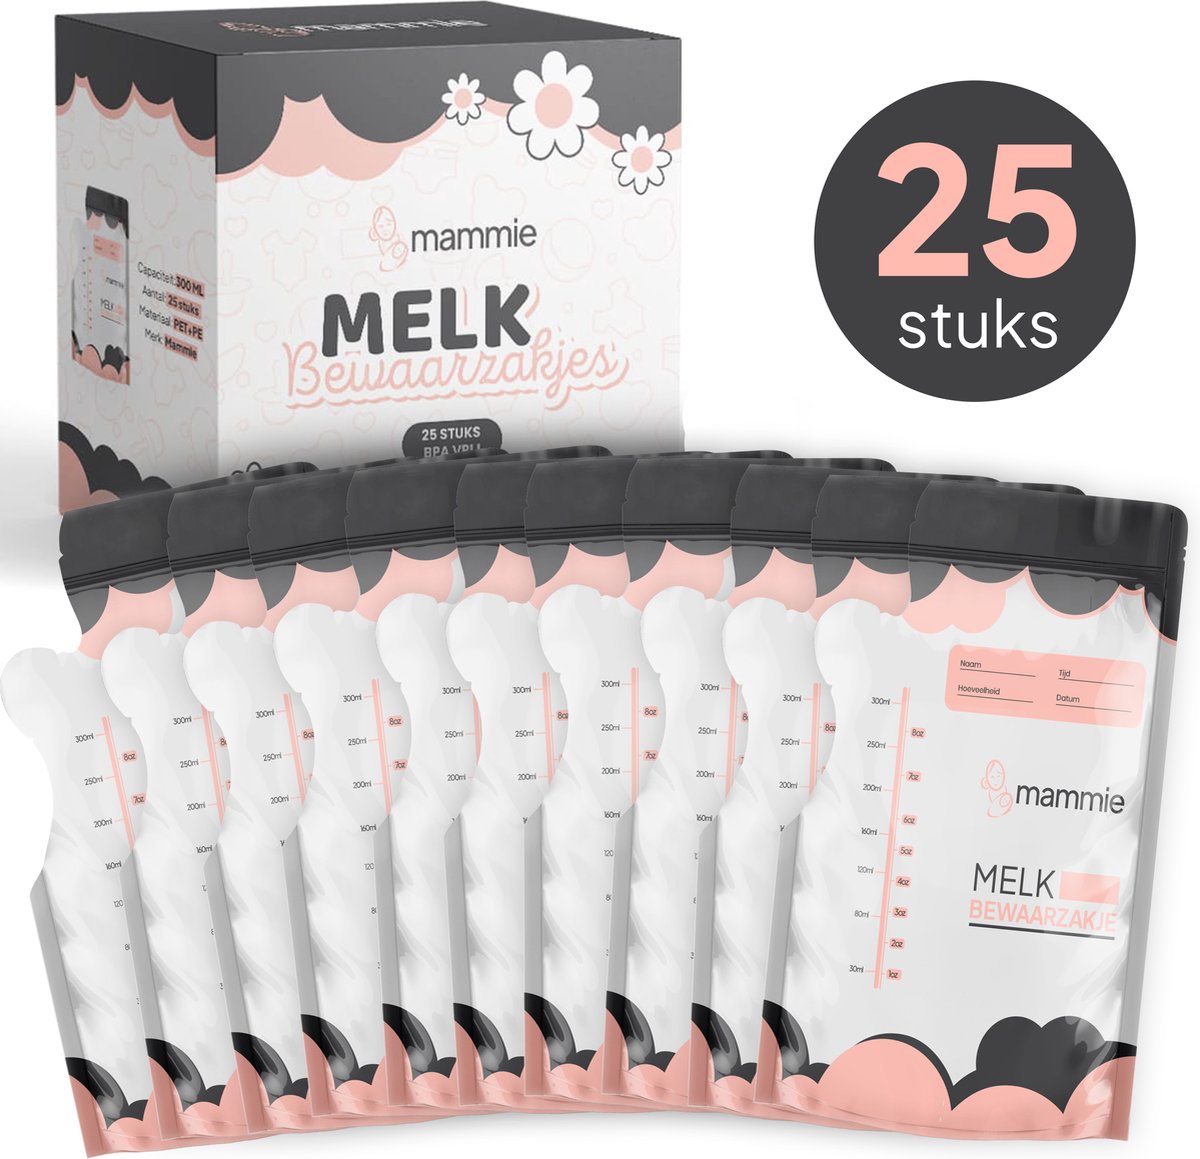 Mammie Moedermelk Bewaarzakjes - 25 stuks - 300 ML - Borstvoeding Zakjes - BPA vrij